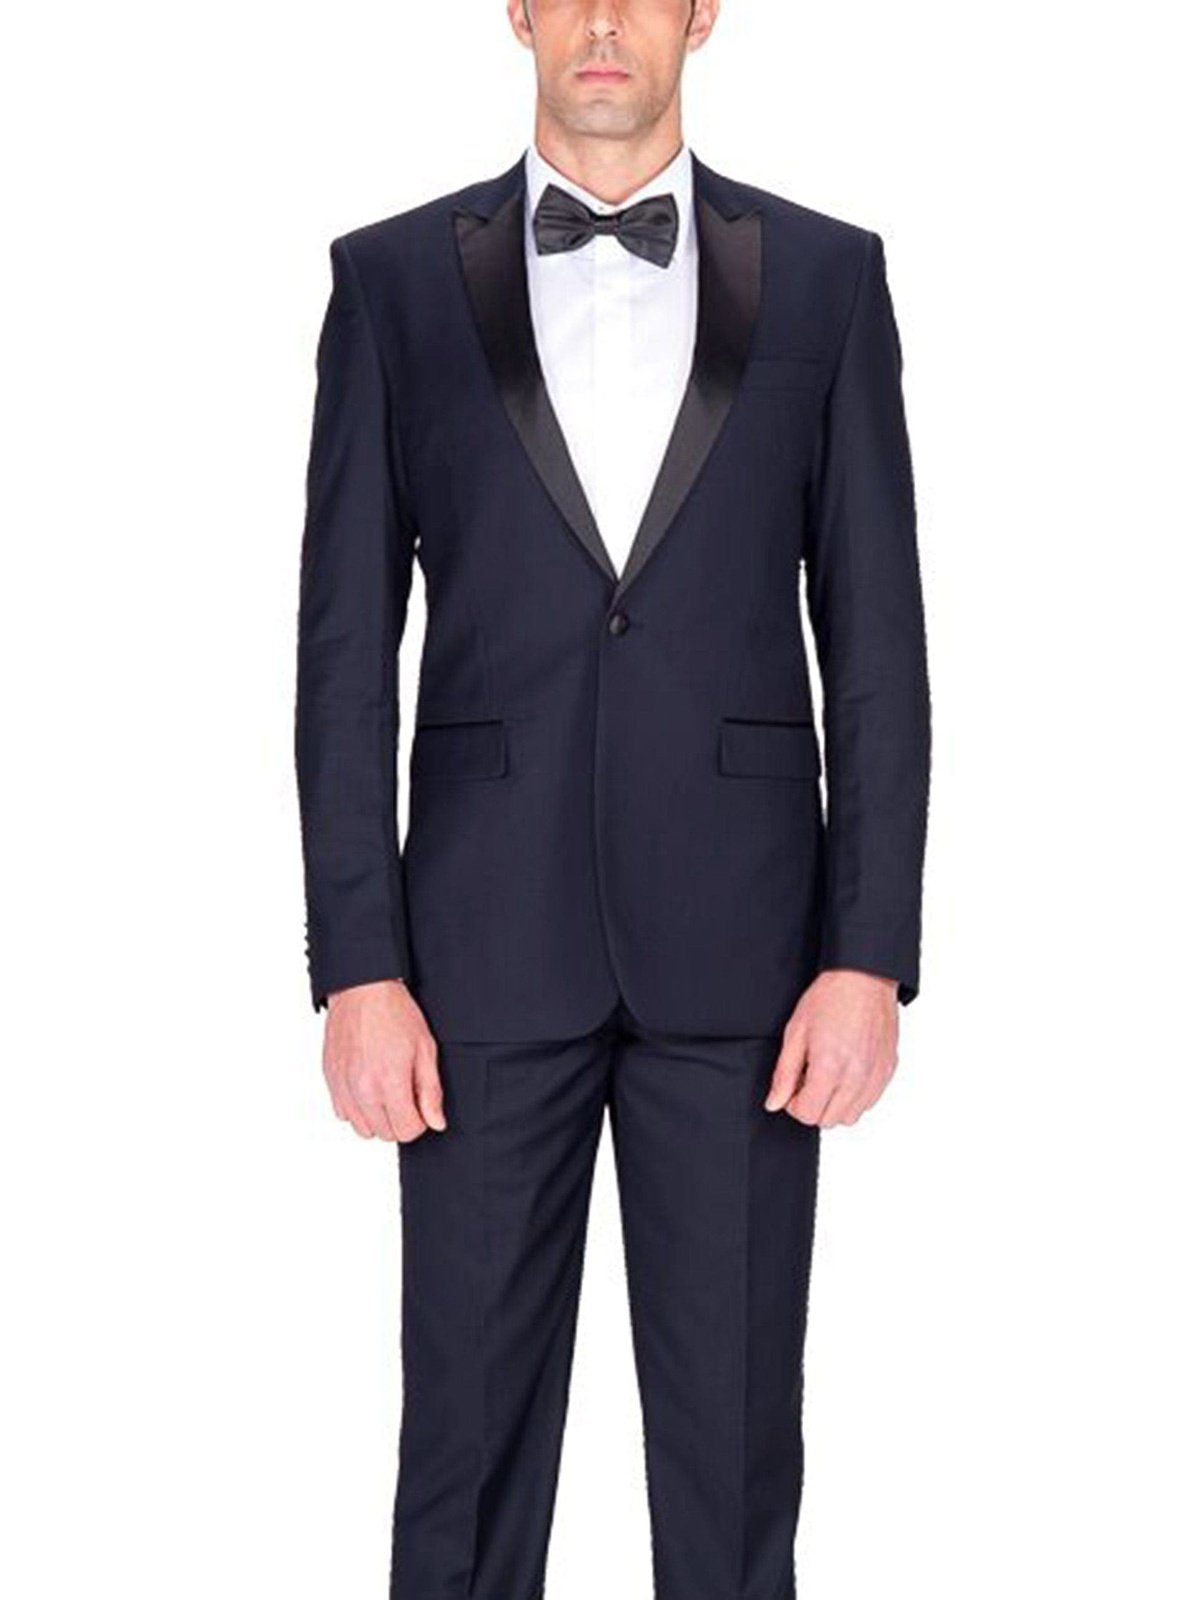 navy blue tuxedo with peak lapels